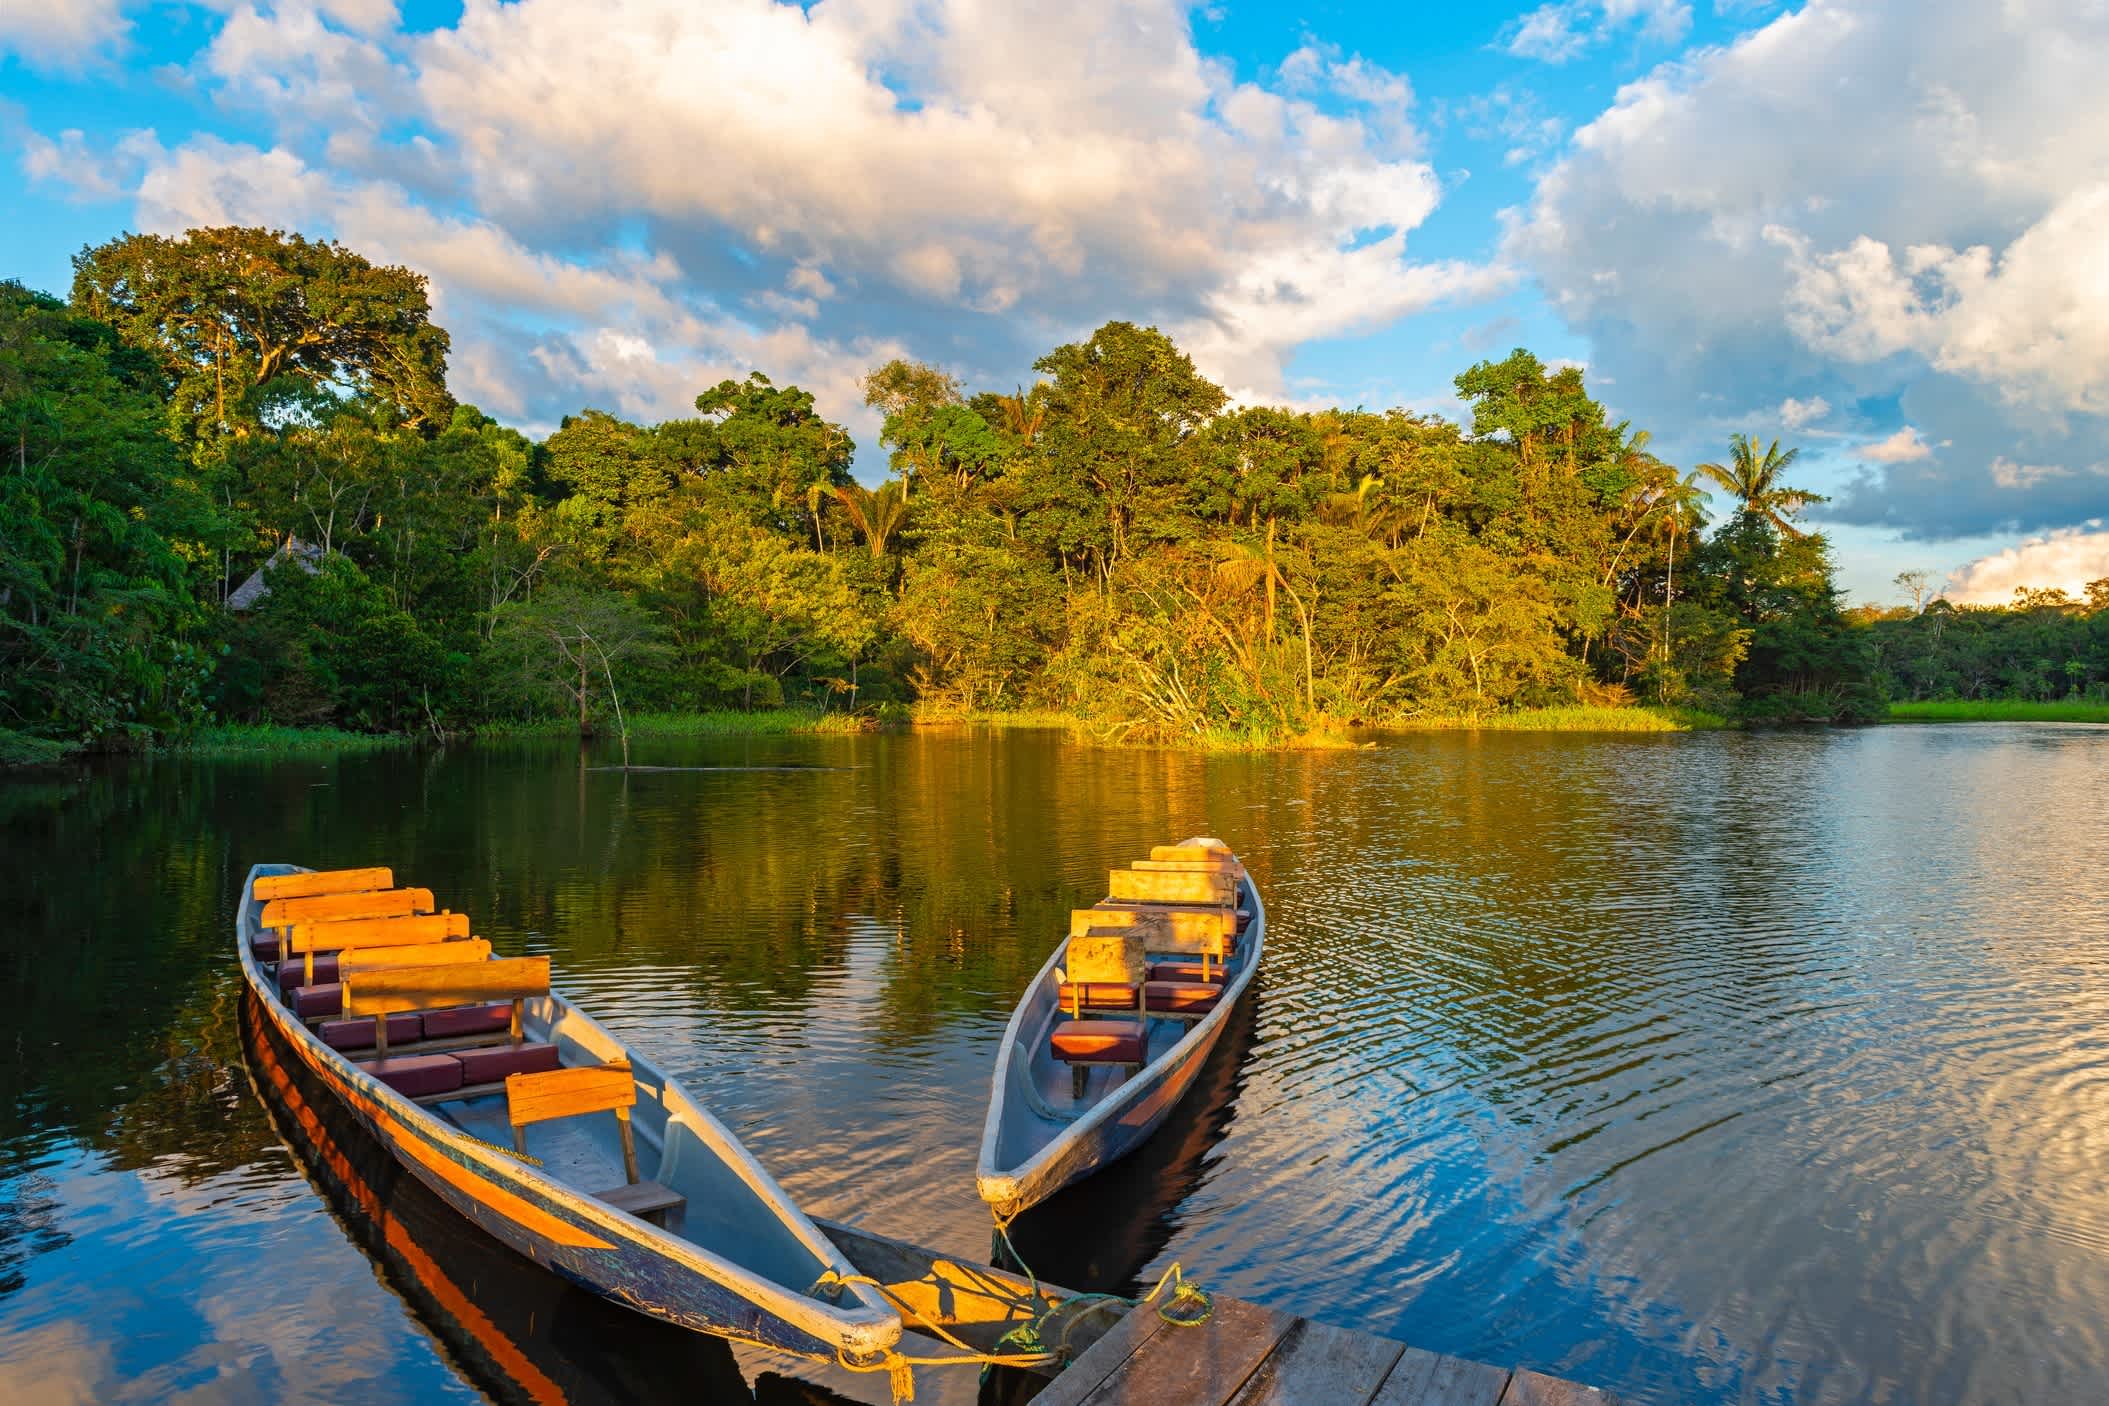 Kanus bei Sonnenuntergang im Amazonas-Regenwald